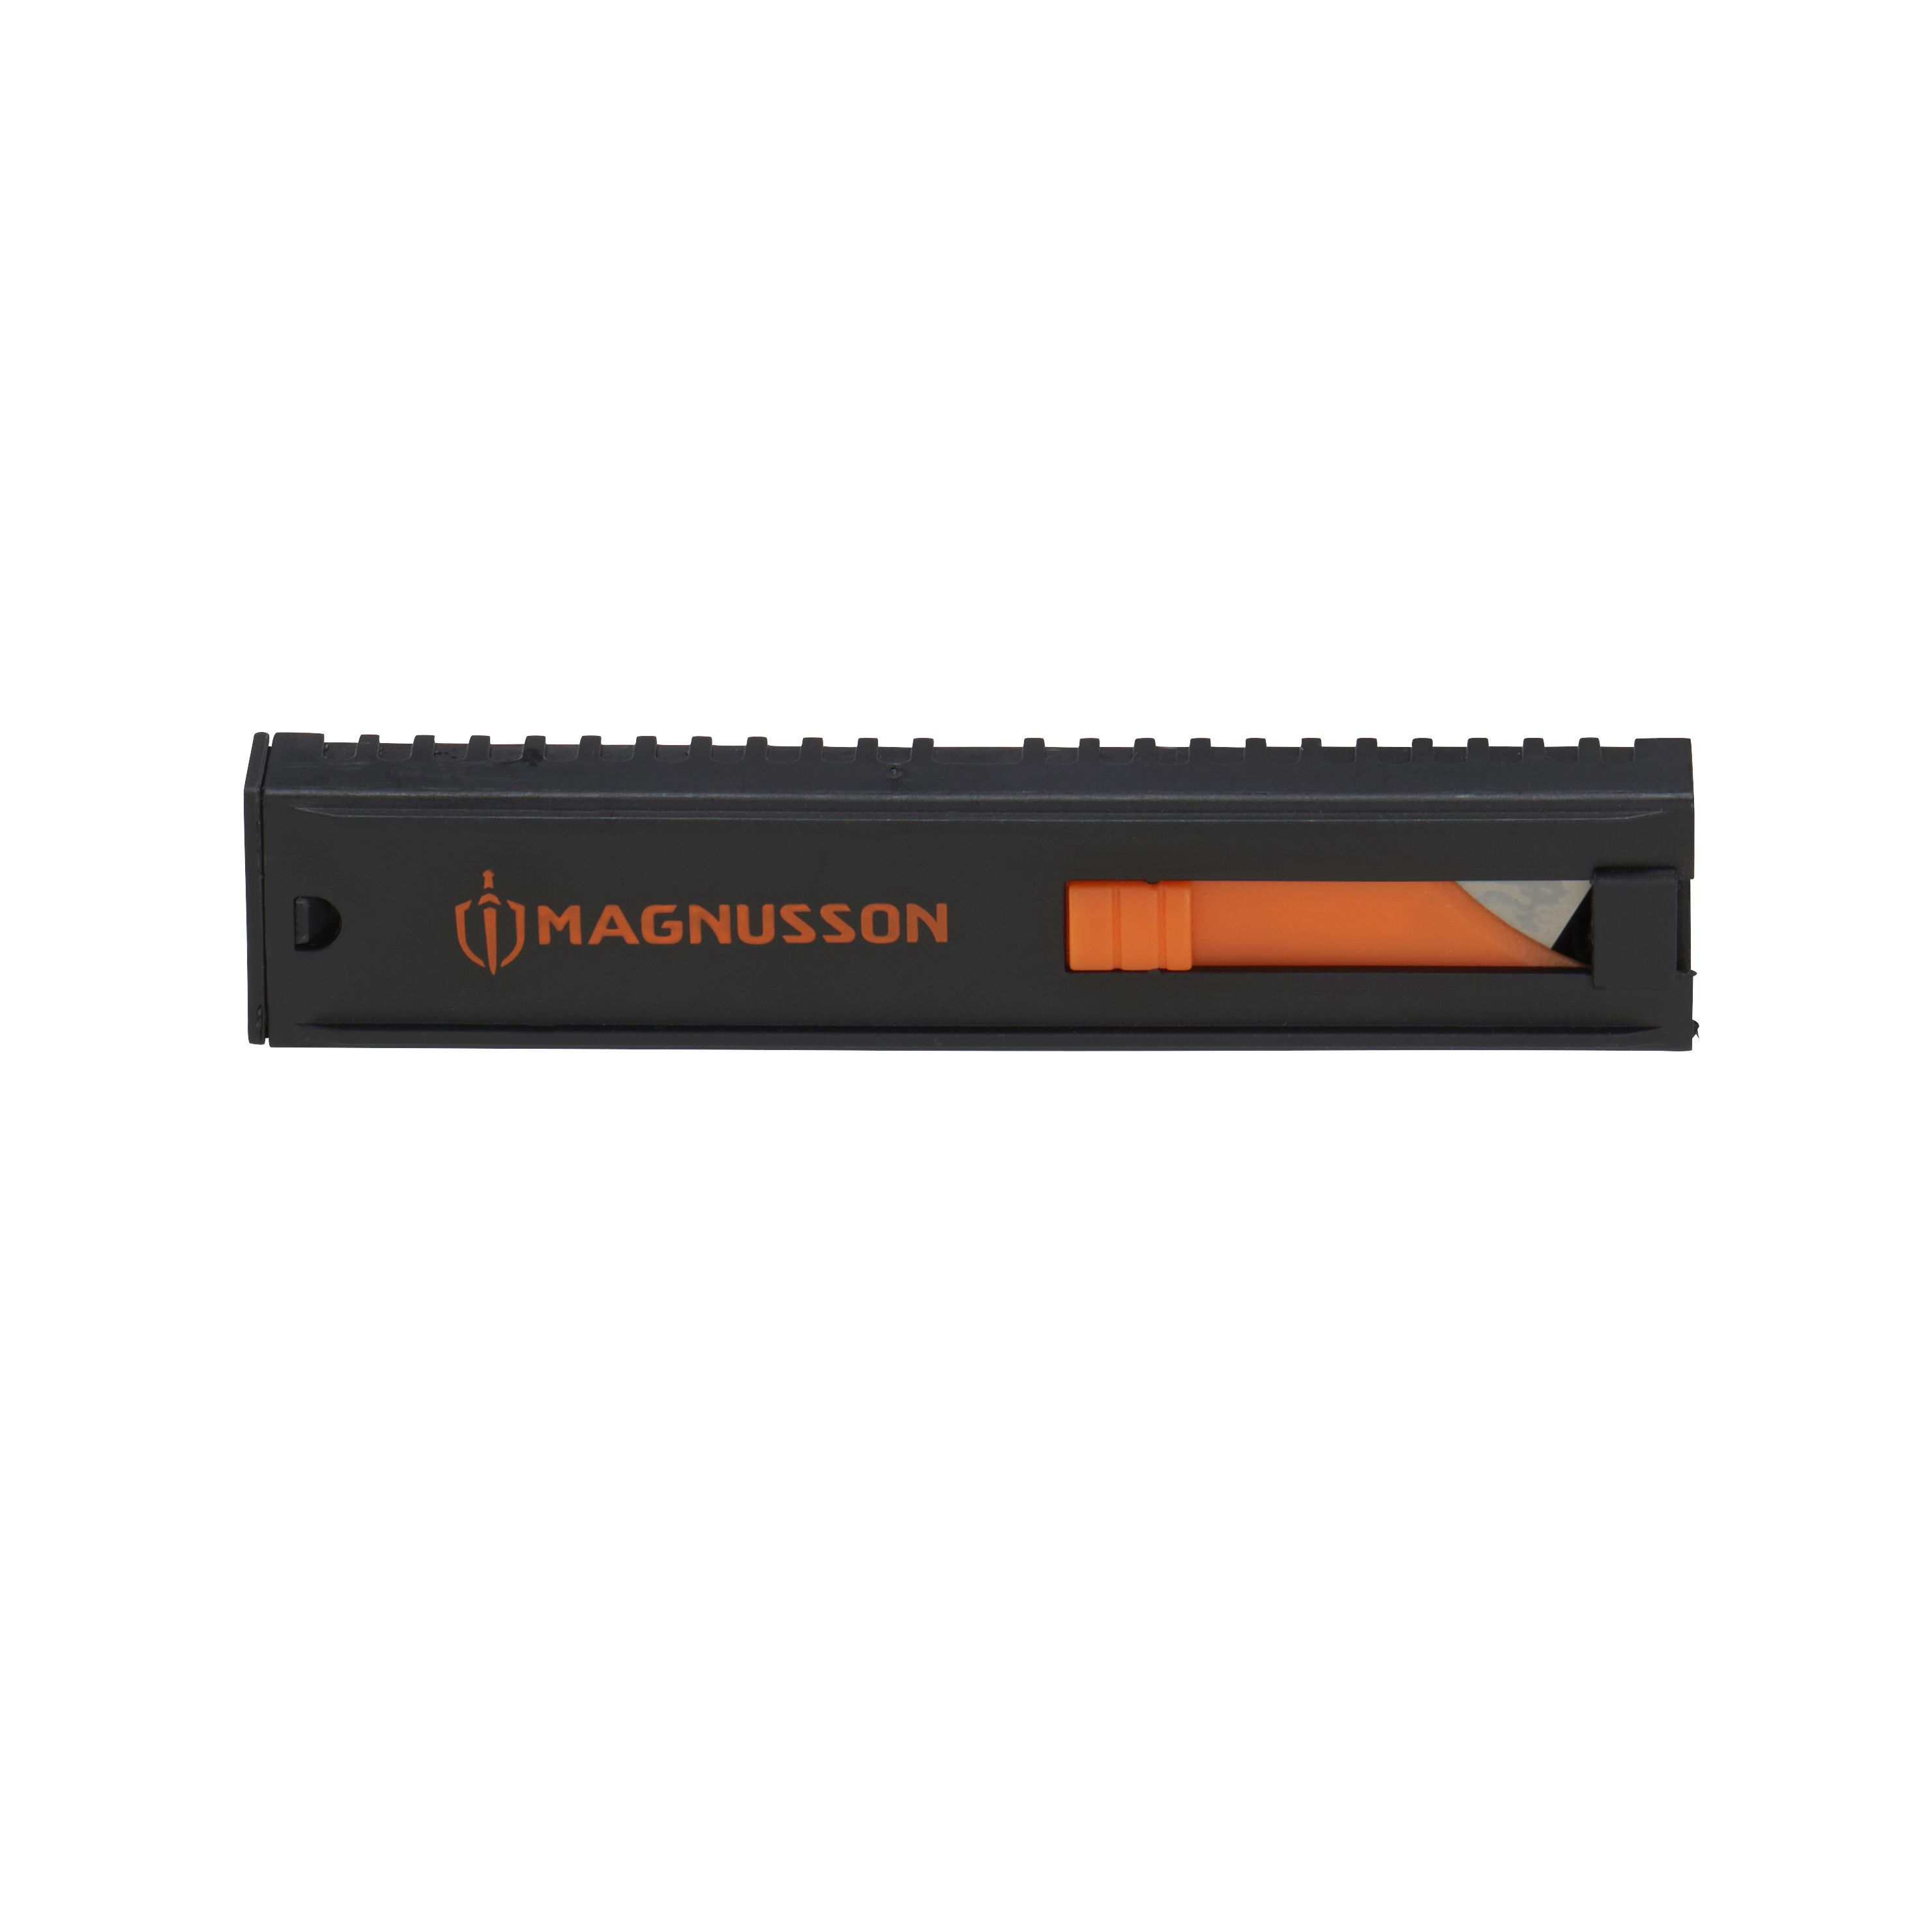 Magnusson 18mm Snap-off Knife blade, Pack of 10